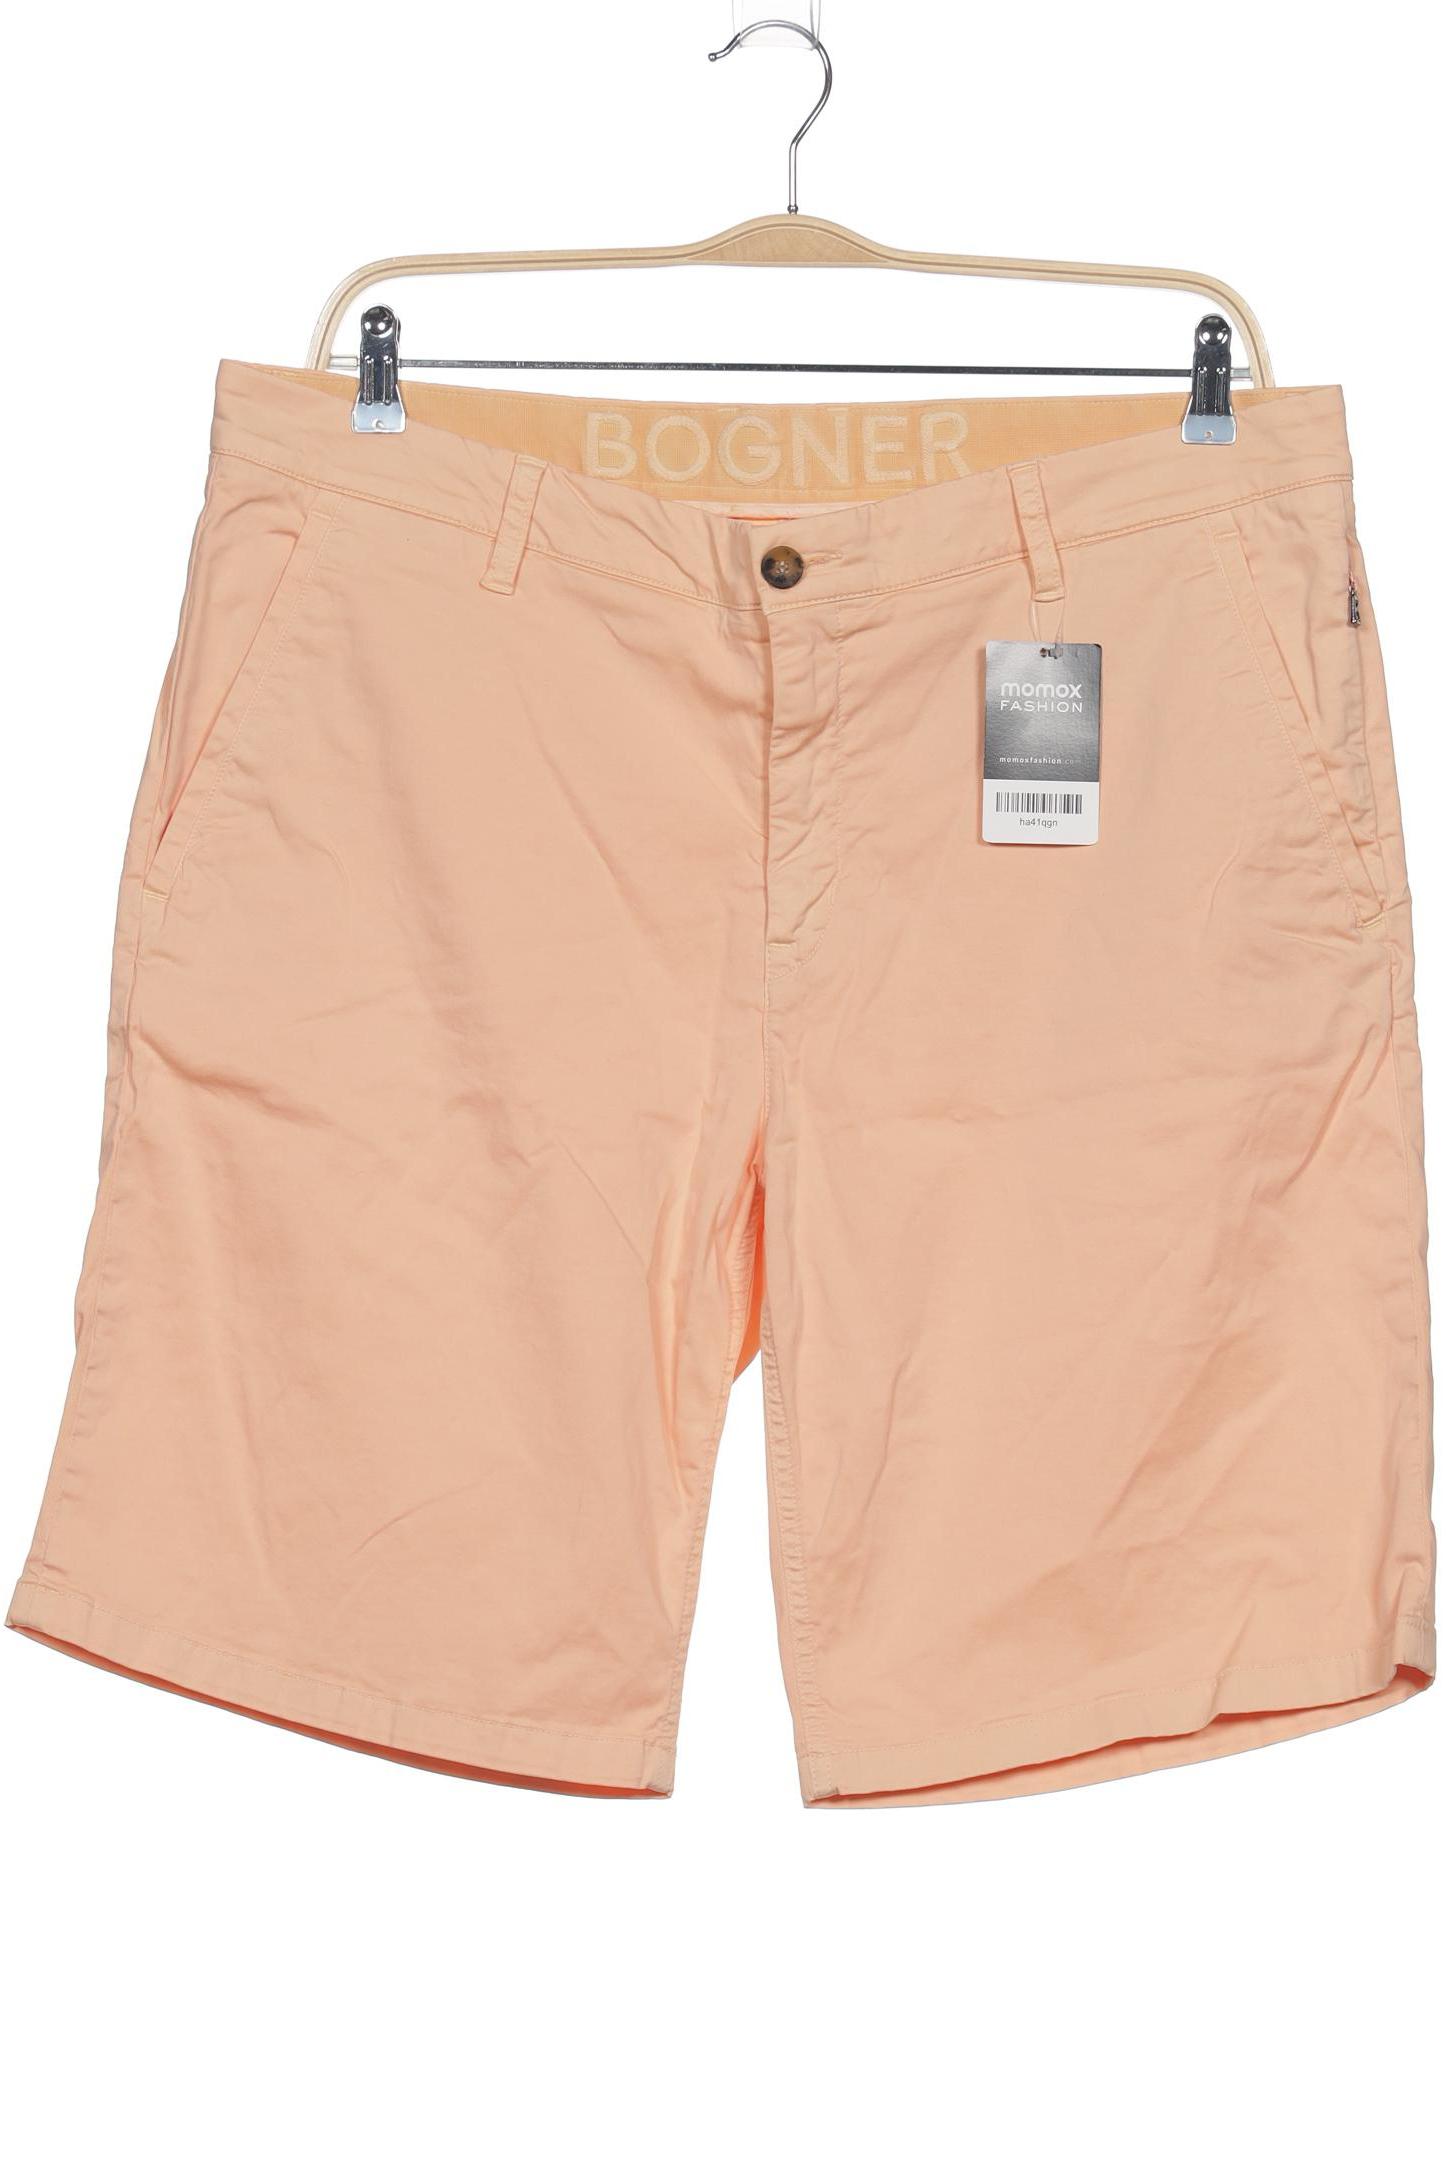 Bogner Herren Shorts, orange, Gr. 54 von Bogner